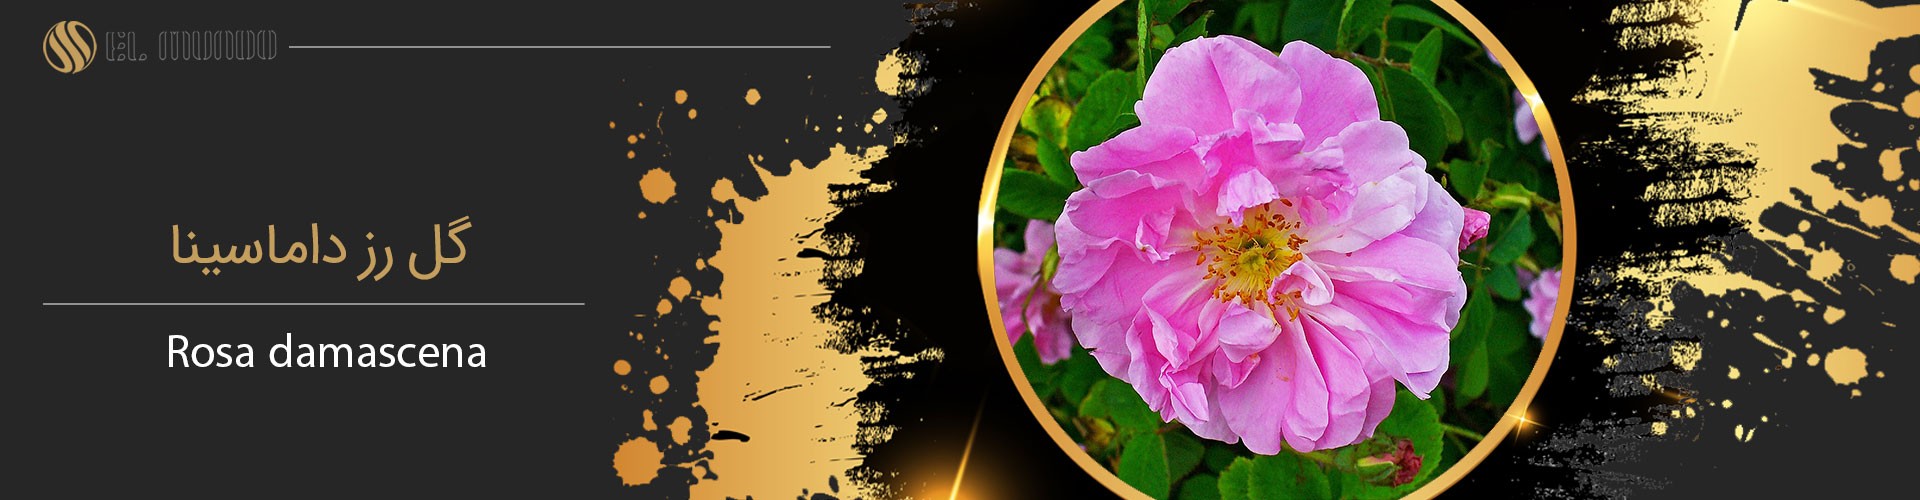 Rosa damascena - نت گل رز عنصر ضروری عطرساز